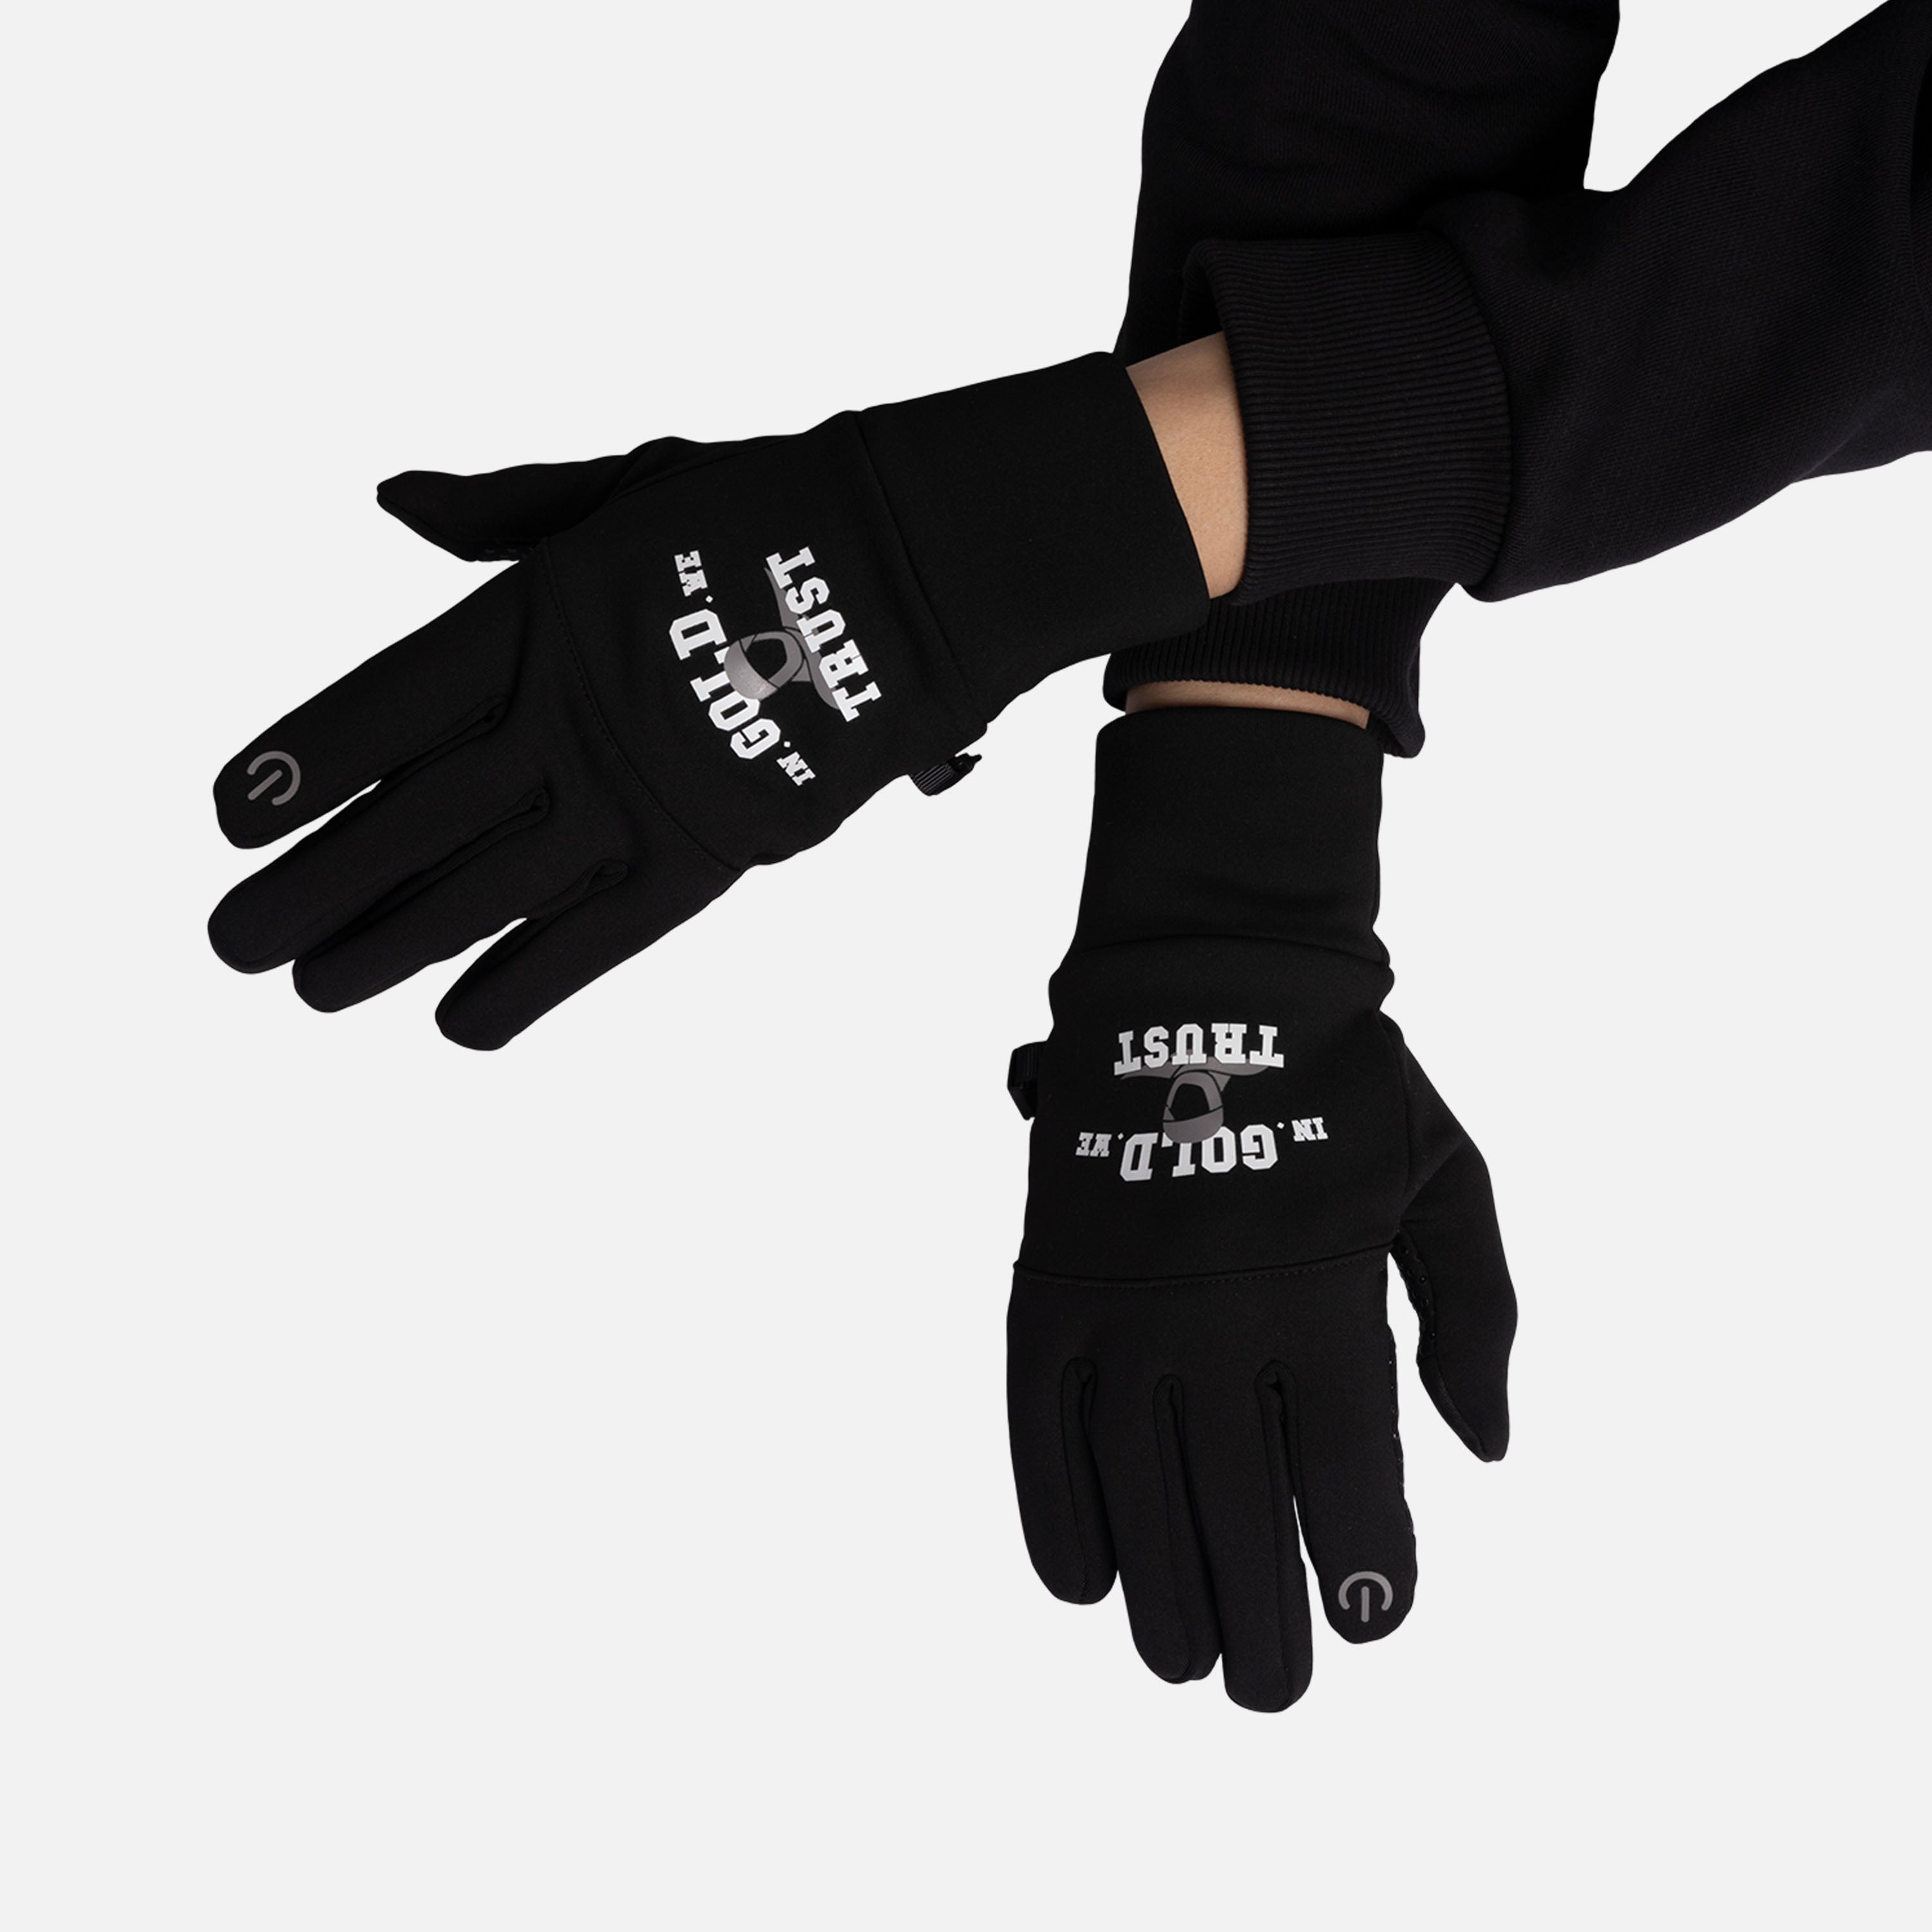 The Glove x Nomad Black